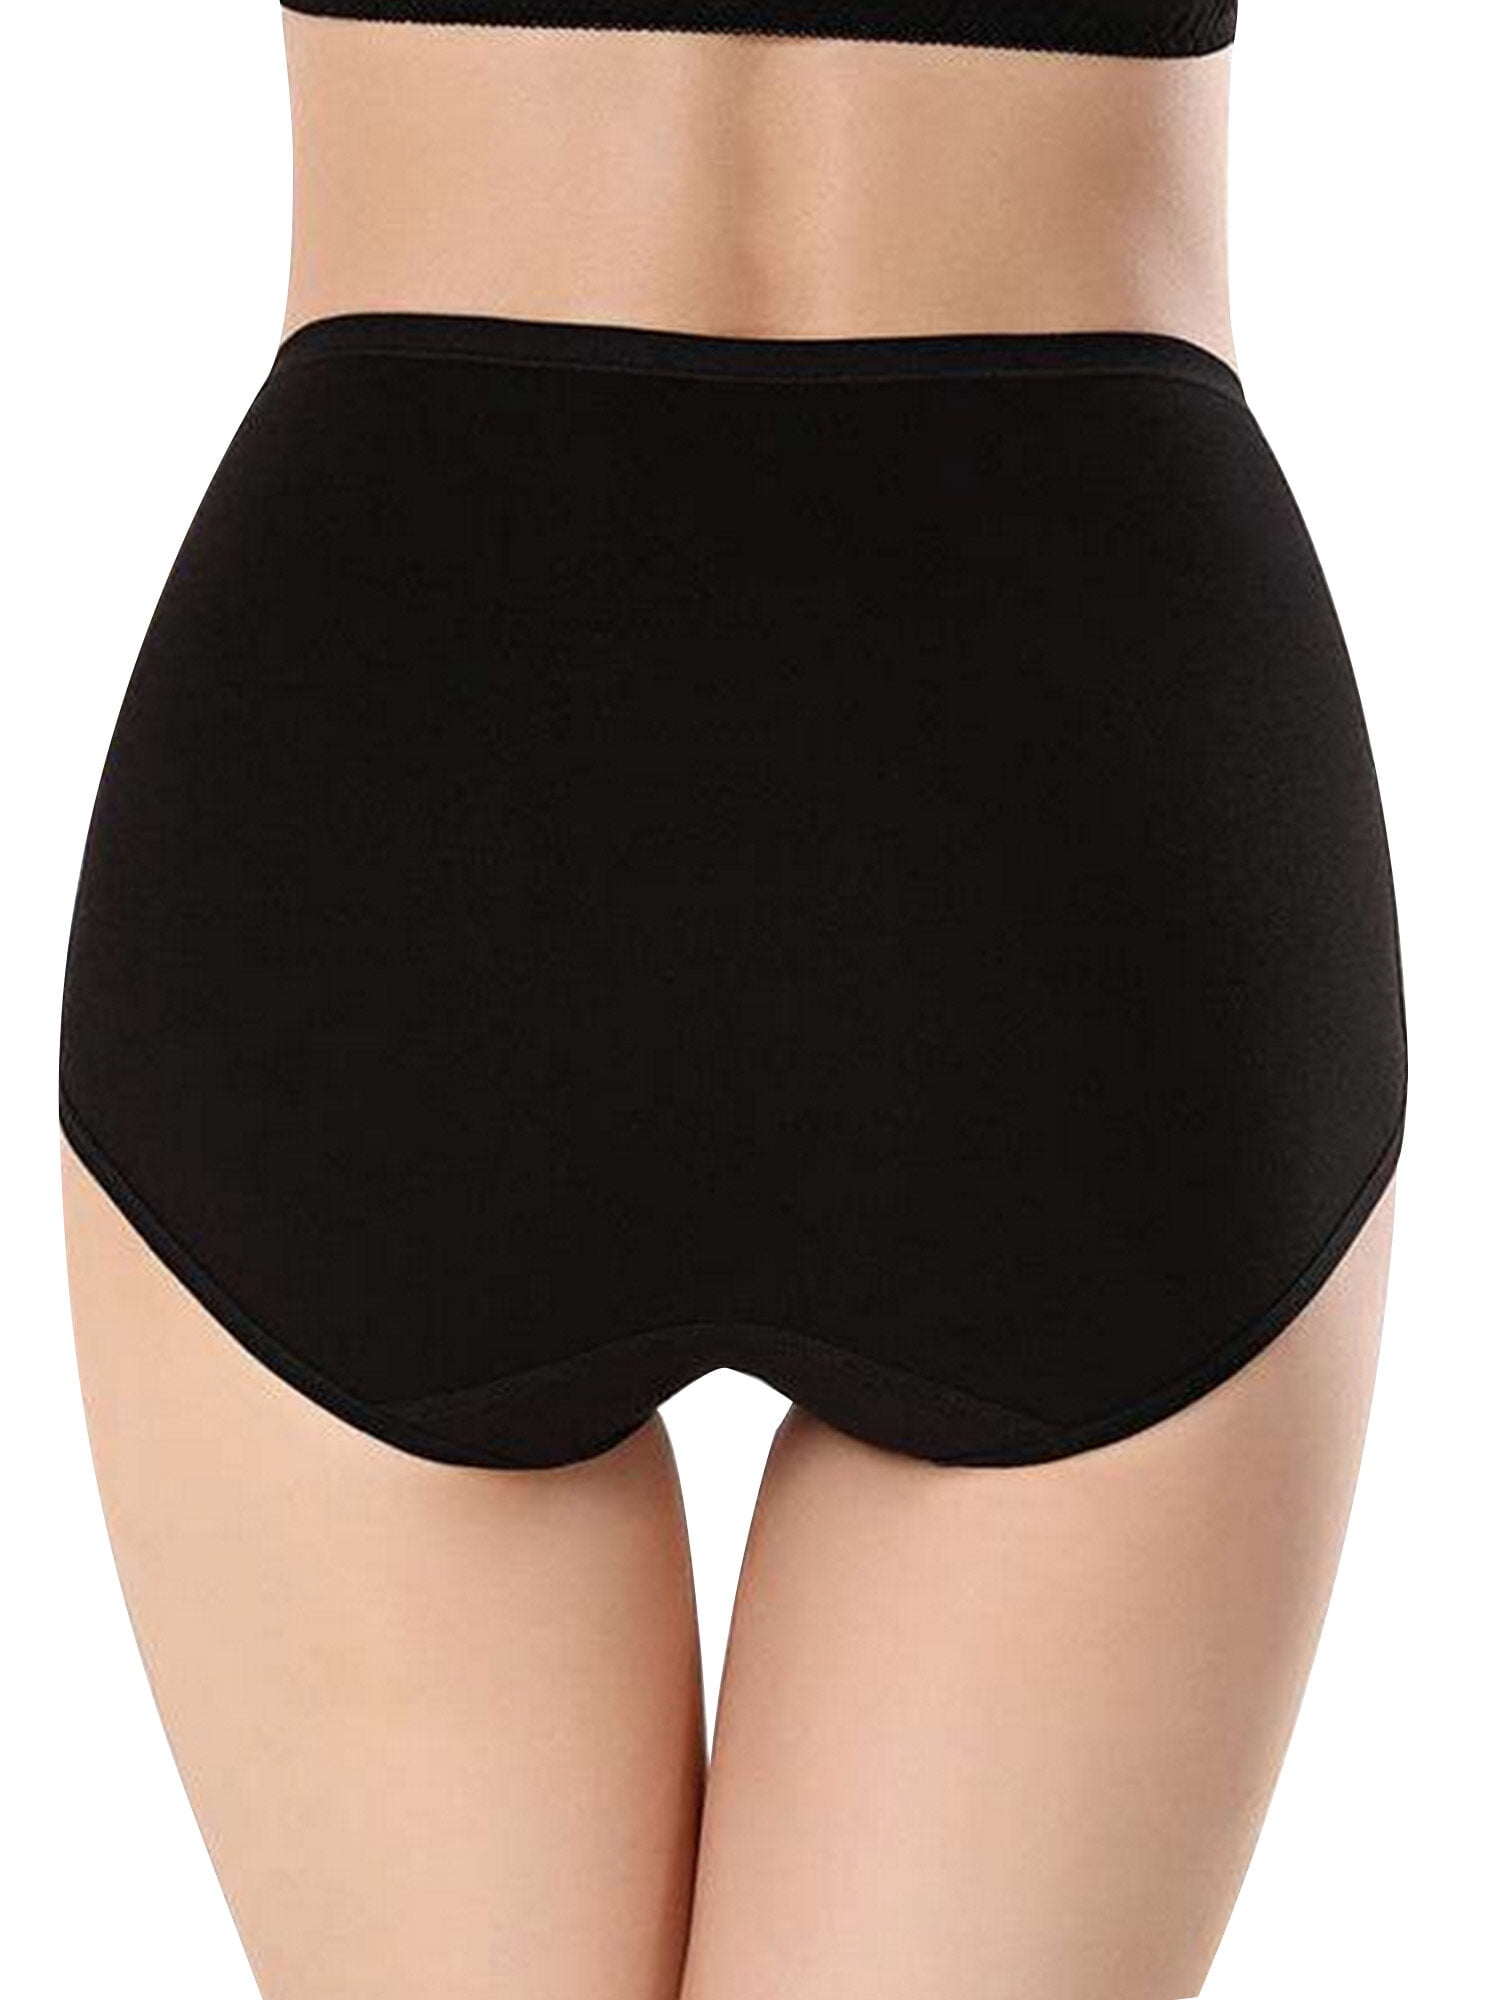 ROTAKUMA Underpants Comfortable Cotton Panties Girls Briefs Floral Print  Panty Lingerie Female Underwear Ladies Knickers (Color : Black, Size :  Large) : : Fashion